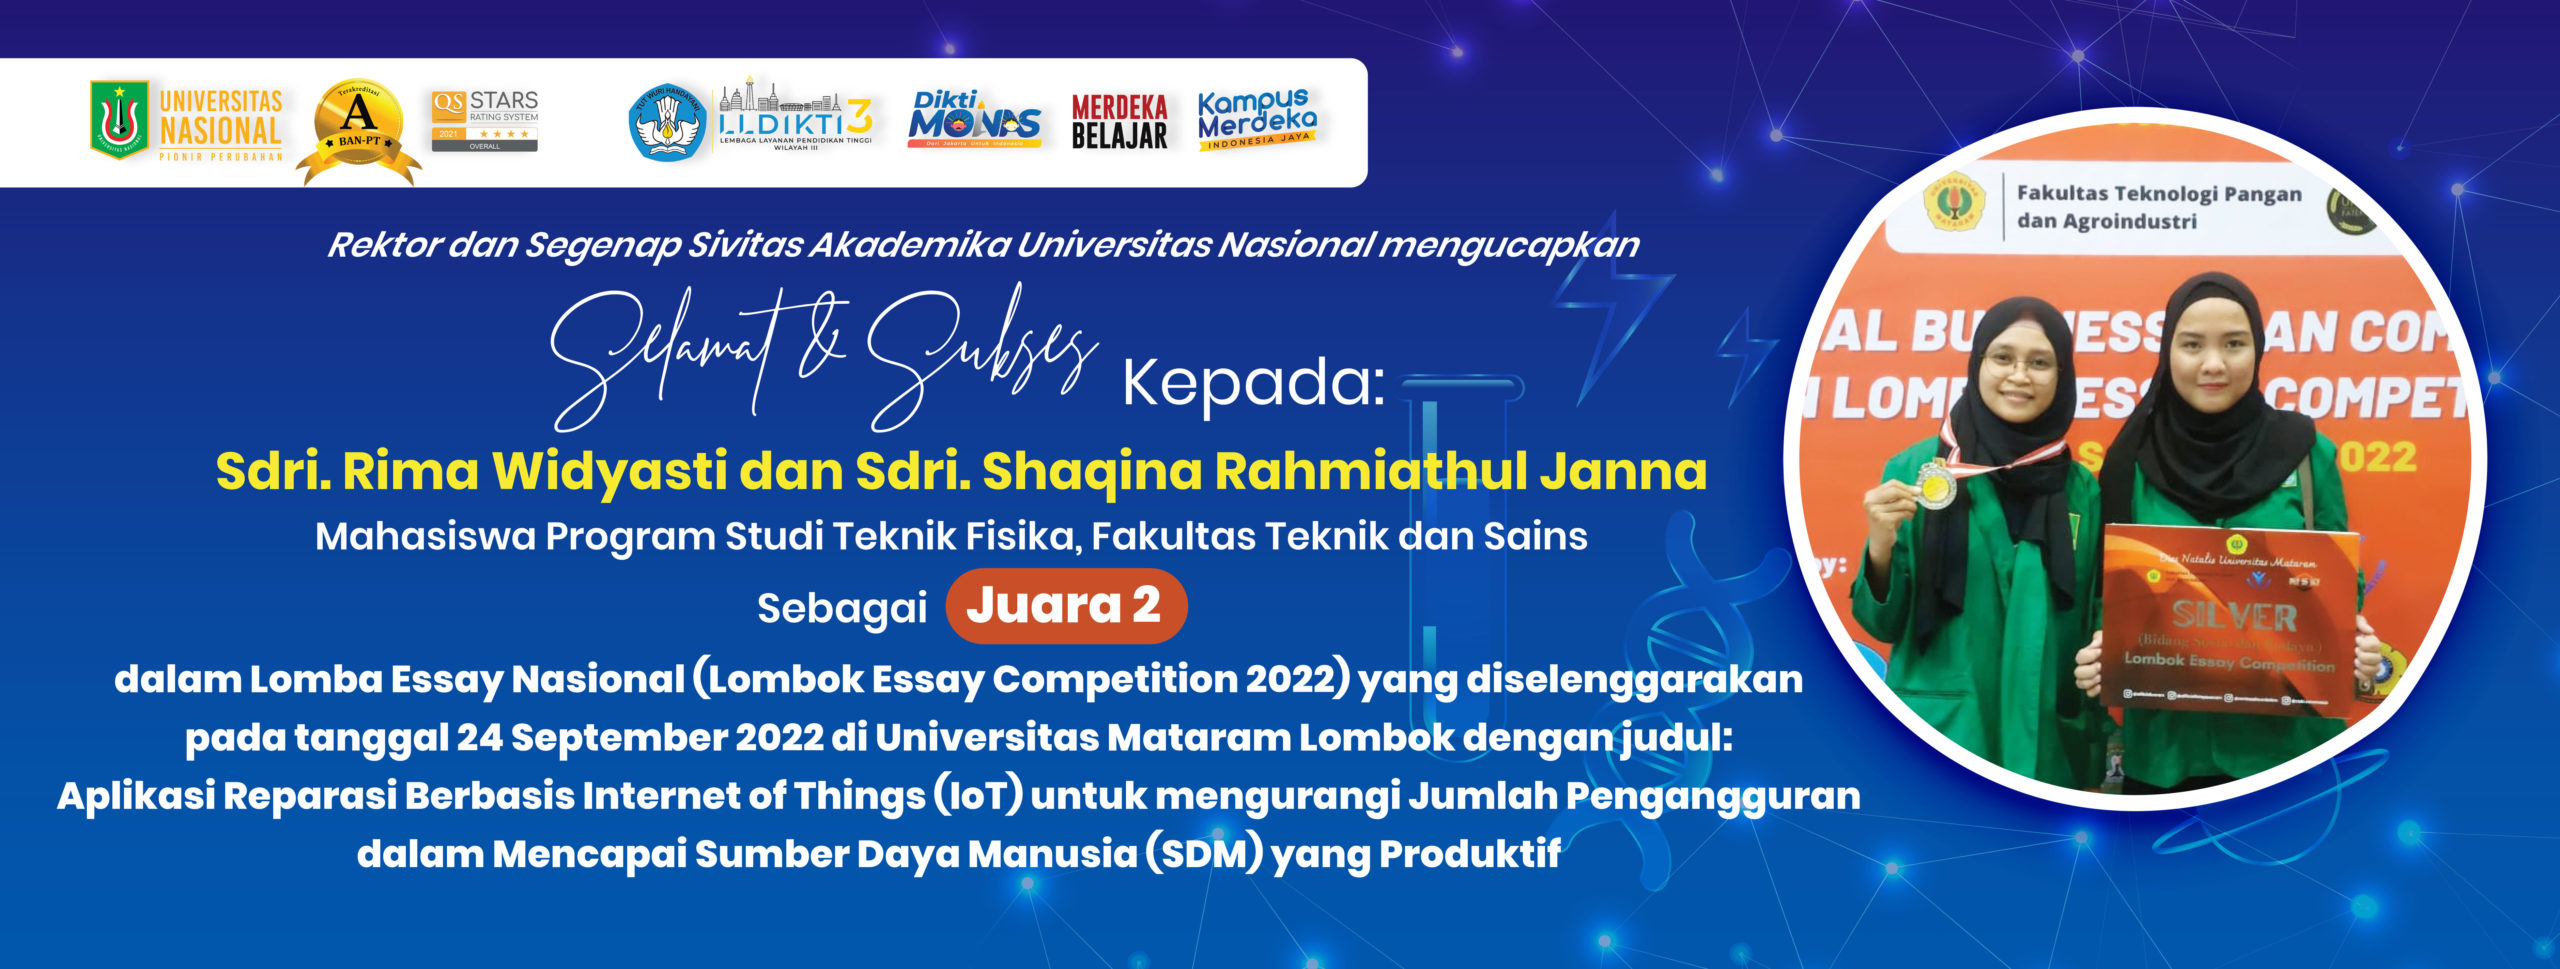 Prestasi Sdri. Rima Widyasti dan Sdri. Shaqina Rahmiathul Janna Mahasiswa Program Studi Teknik Fisika, Fakultas Teknik dan Sains